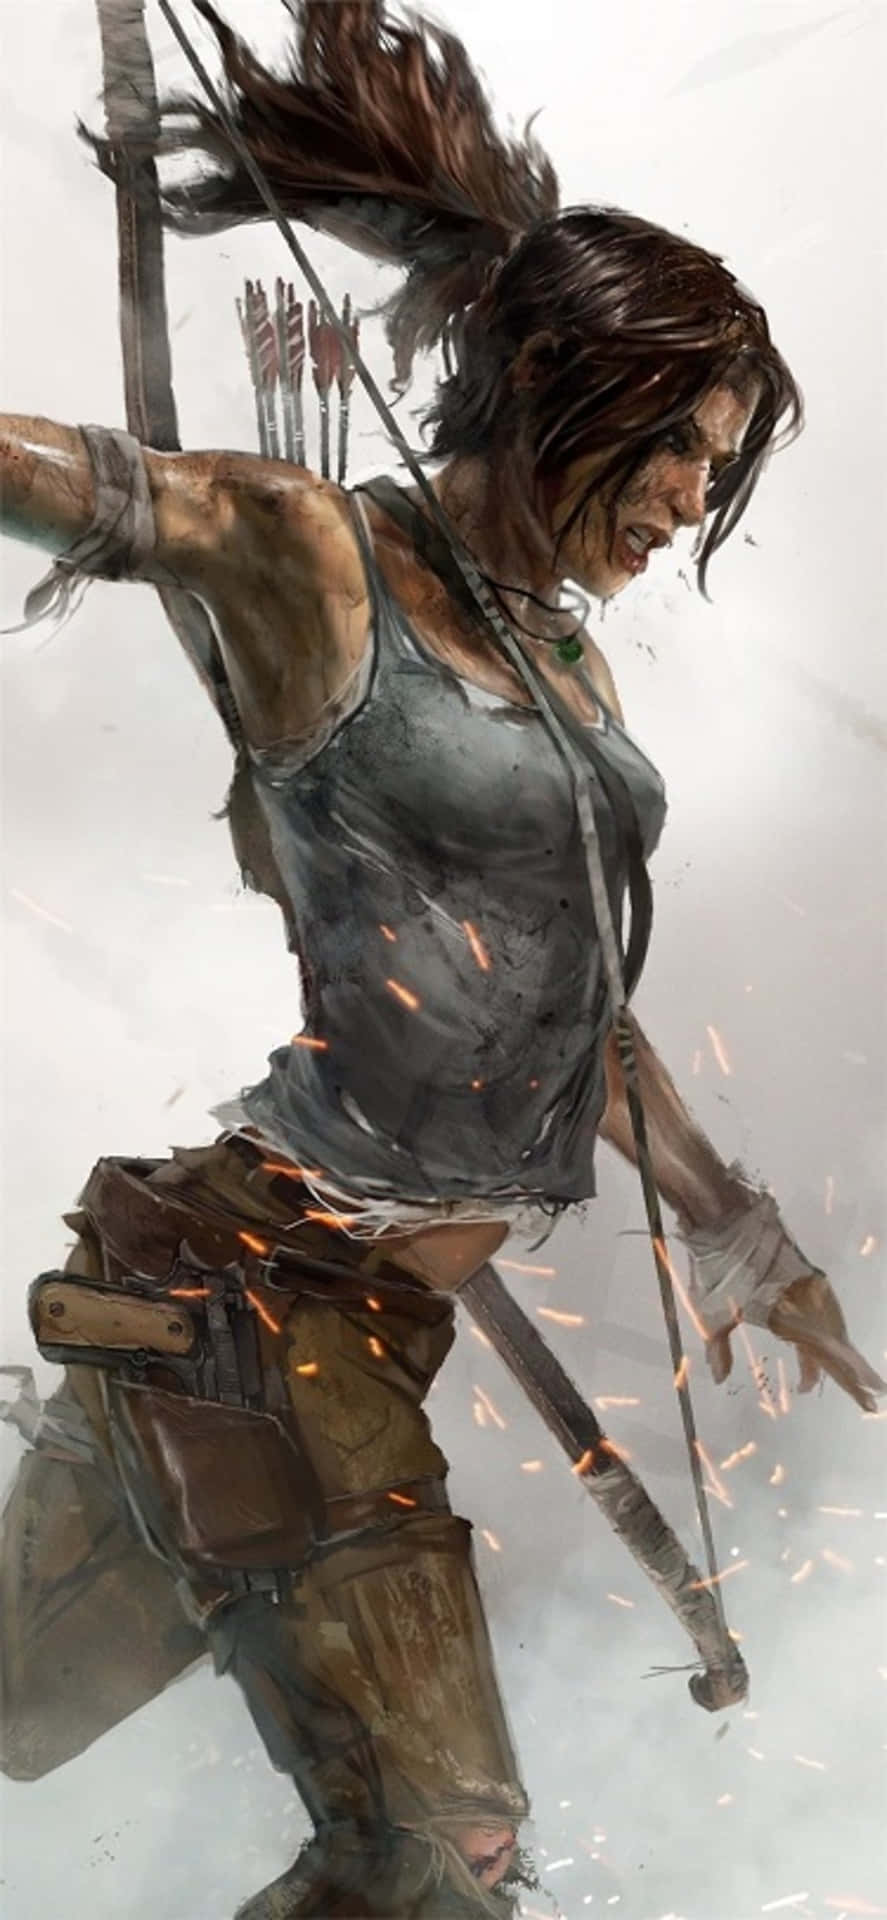 Sumérgeteen Una Aventura Inolvidable Con Shadow Of The Tomb Raider.